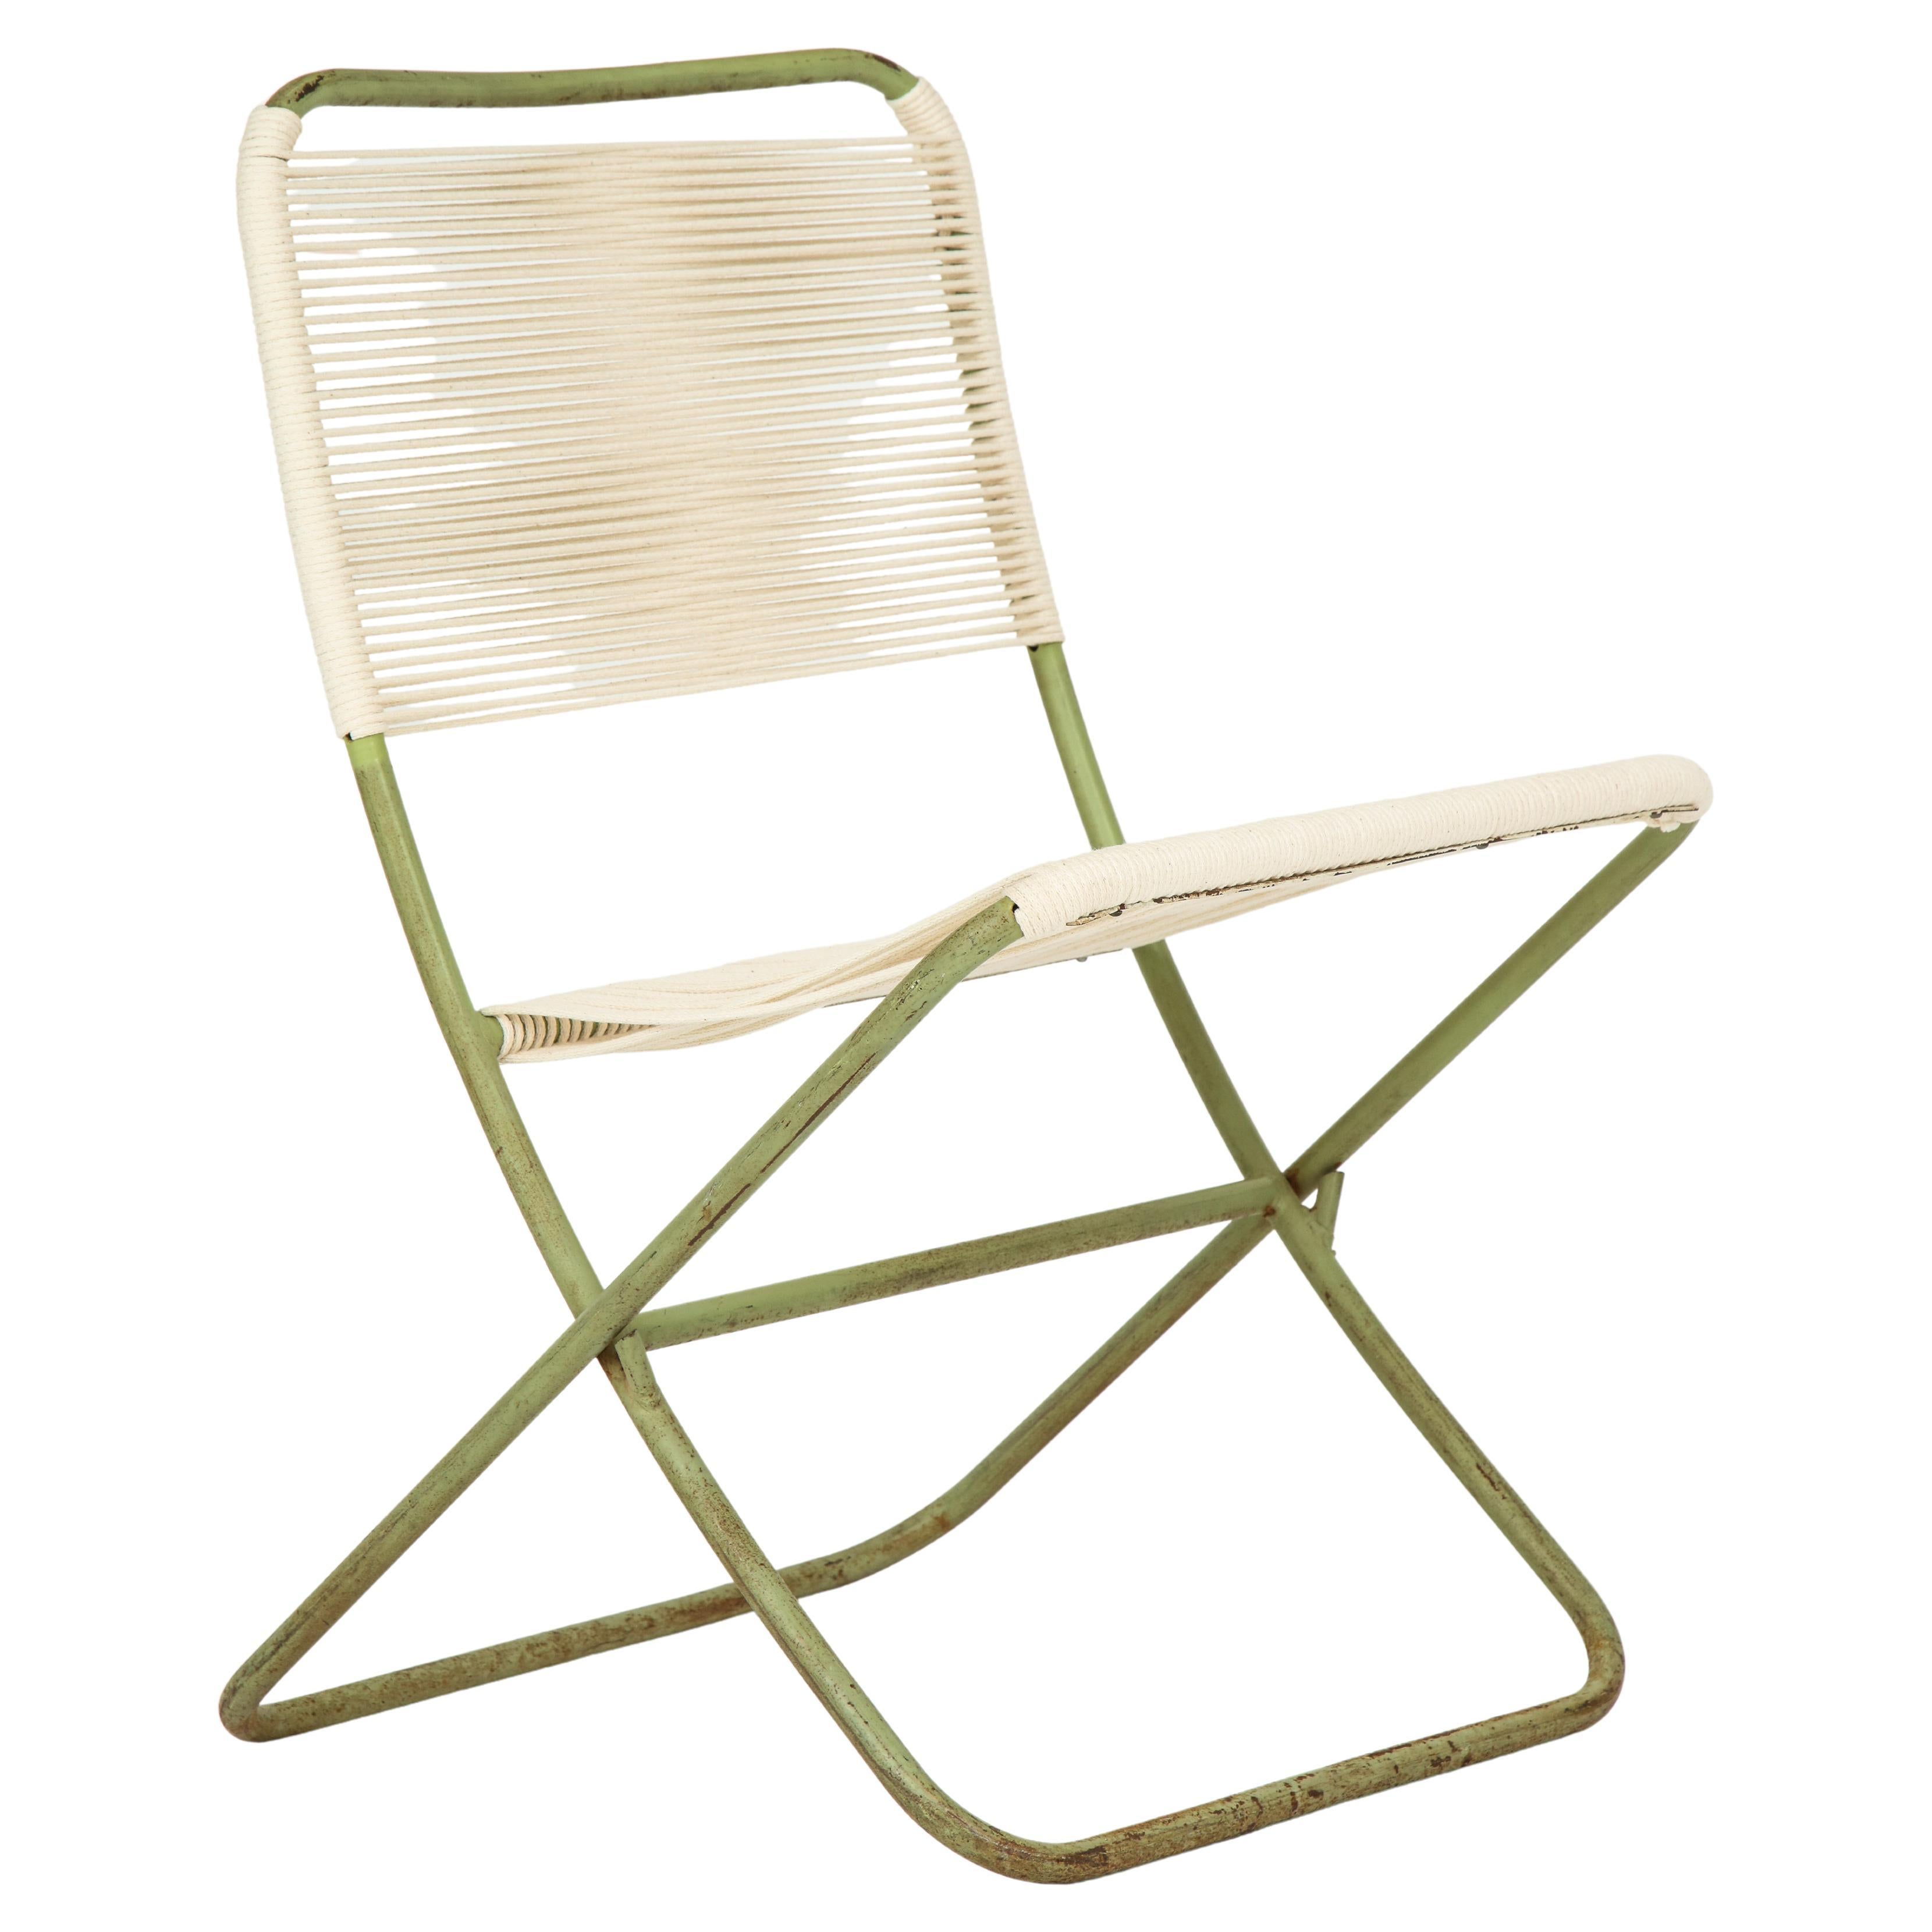 Greta Grossman Folding Chair For Sale